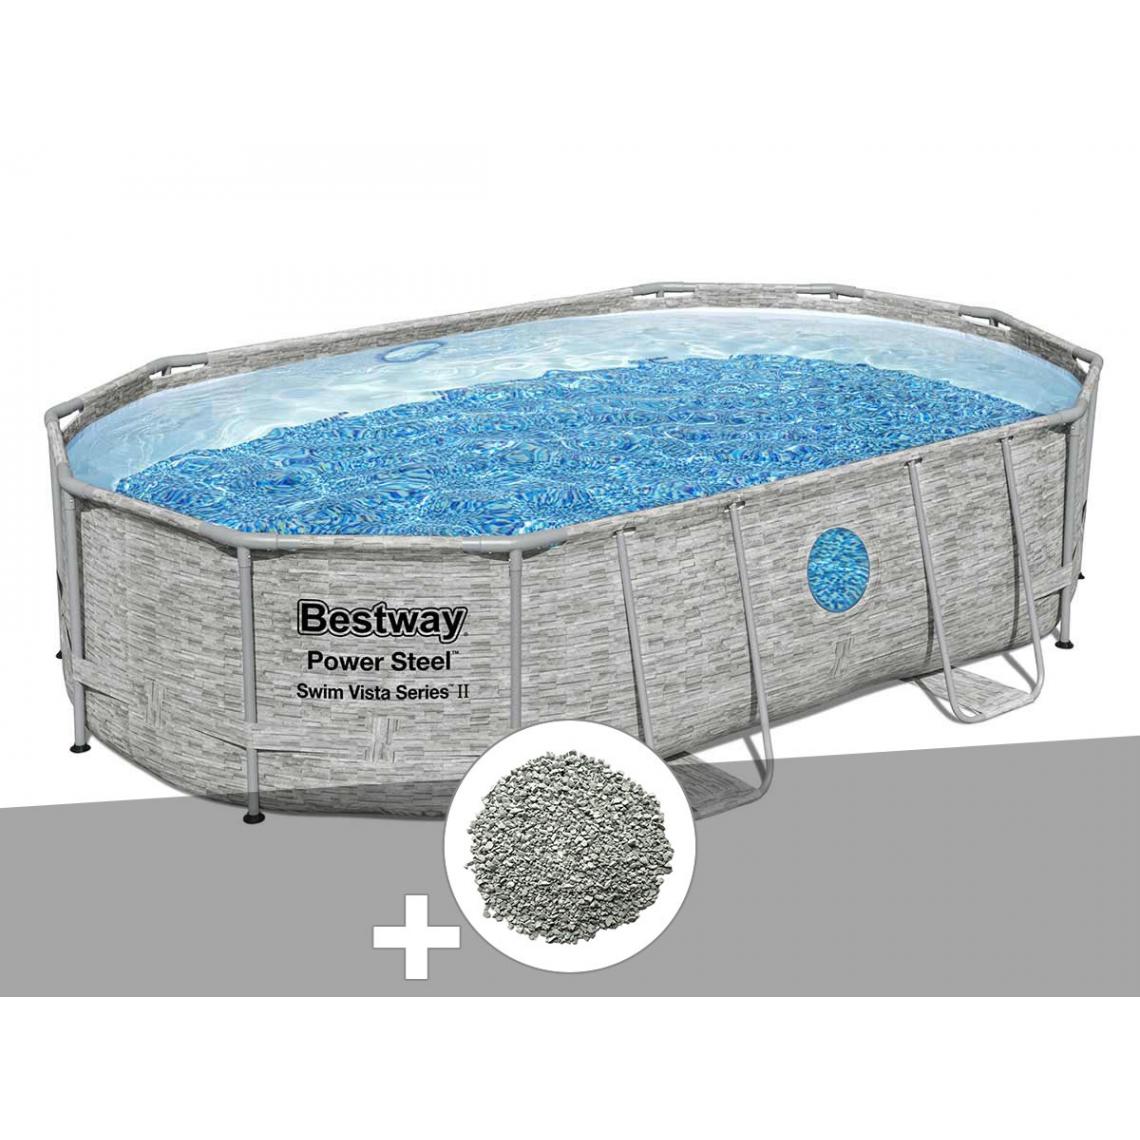 Bestway - Kit piscine tubulaire ovale Bestway Power Steel SwimVista avec hublots 4,88 x 3,05 x 1,07 m + 10 kg de zéolite - Piscine Tubulaire